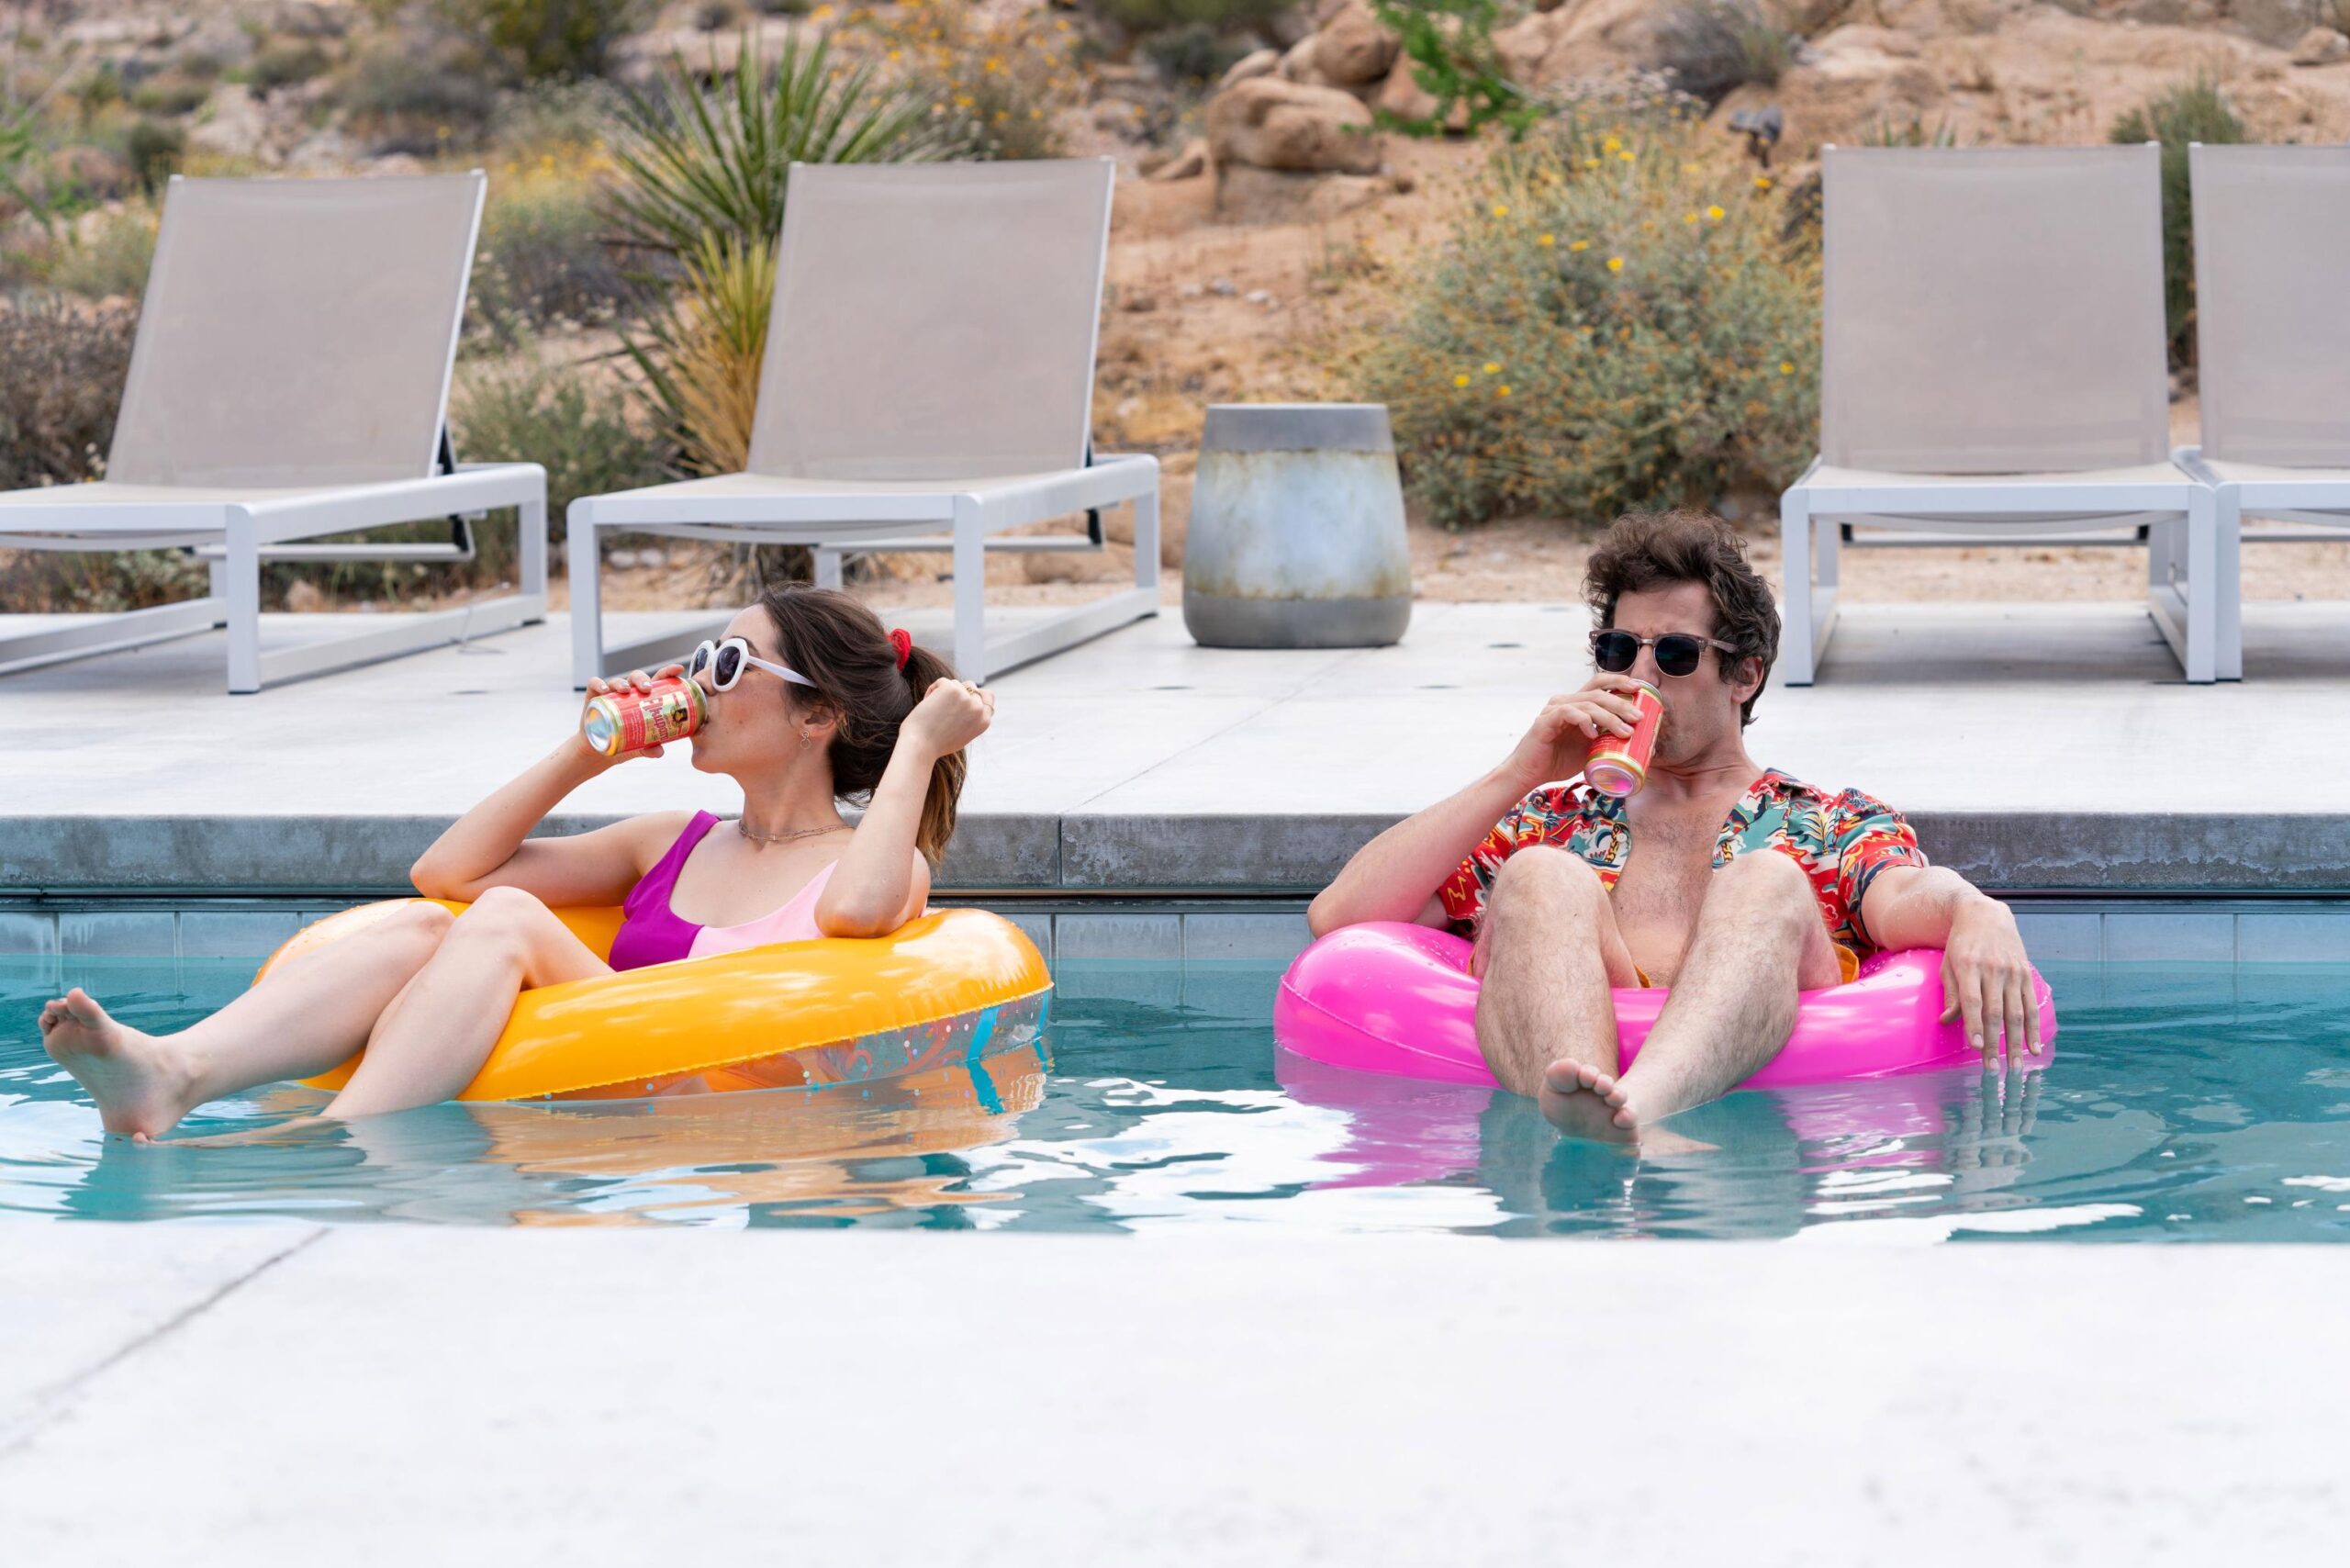 Palm Springs con Andy Samberg